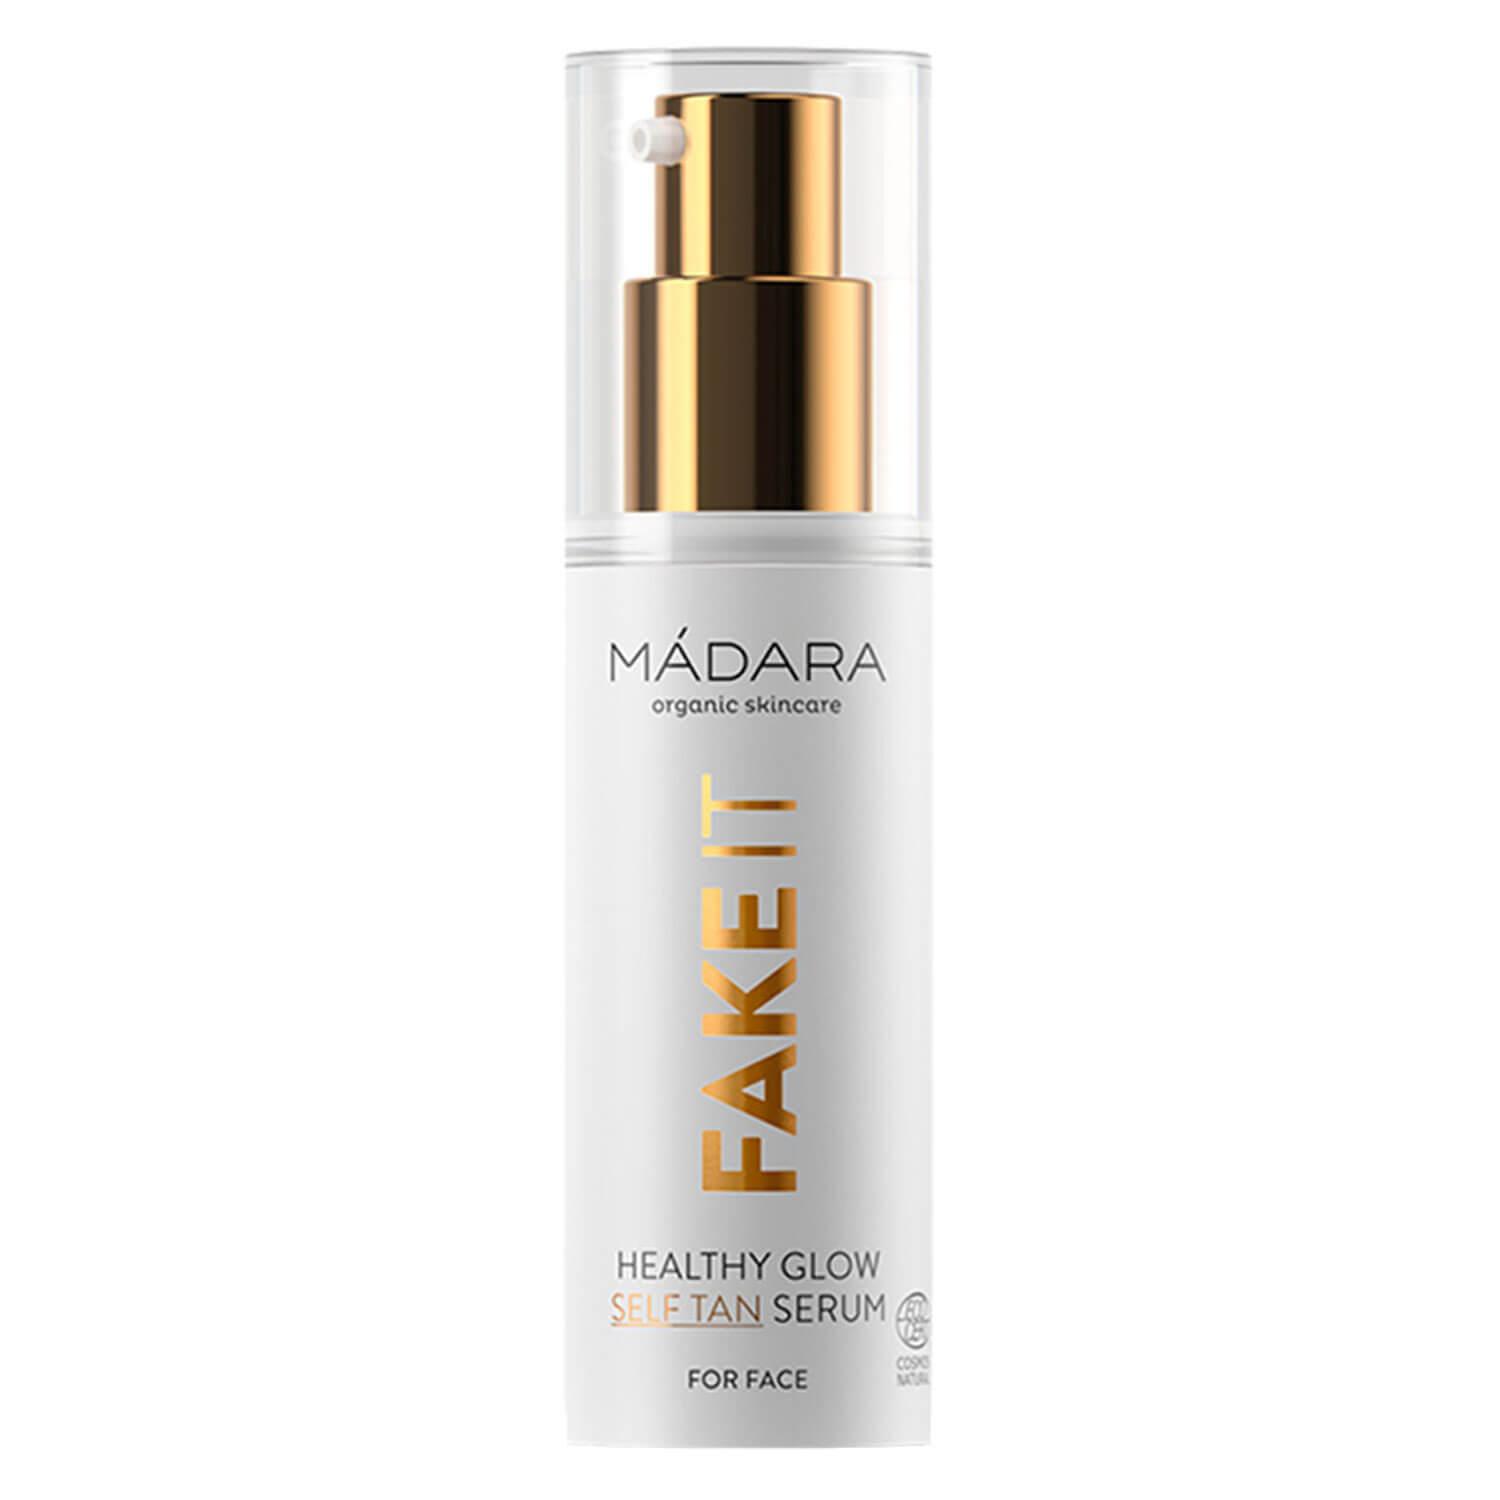 MÁDARA Care - Fake It Healthy Glow Self Tan Serum For Face